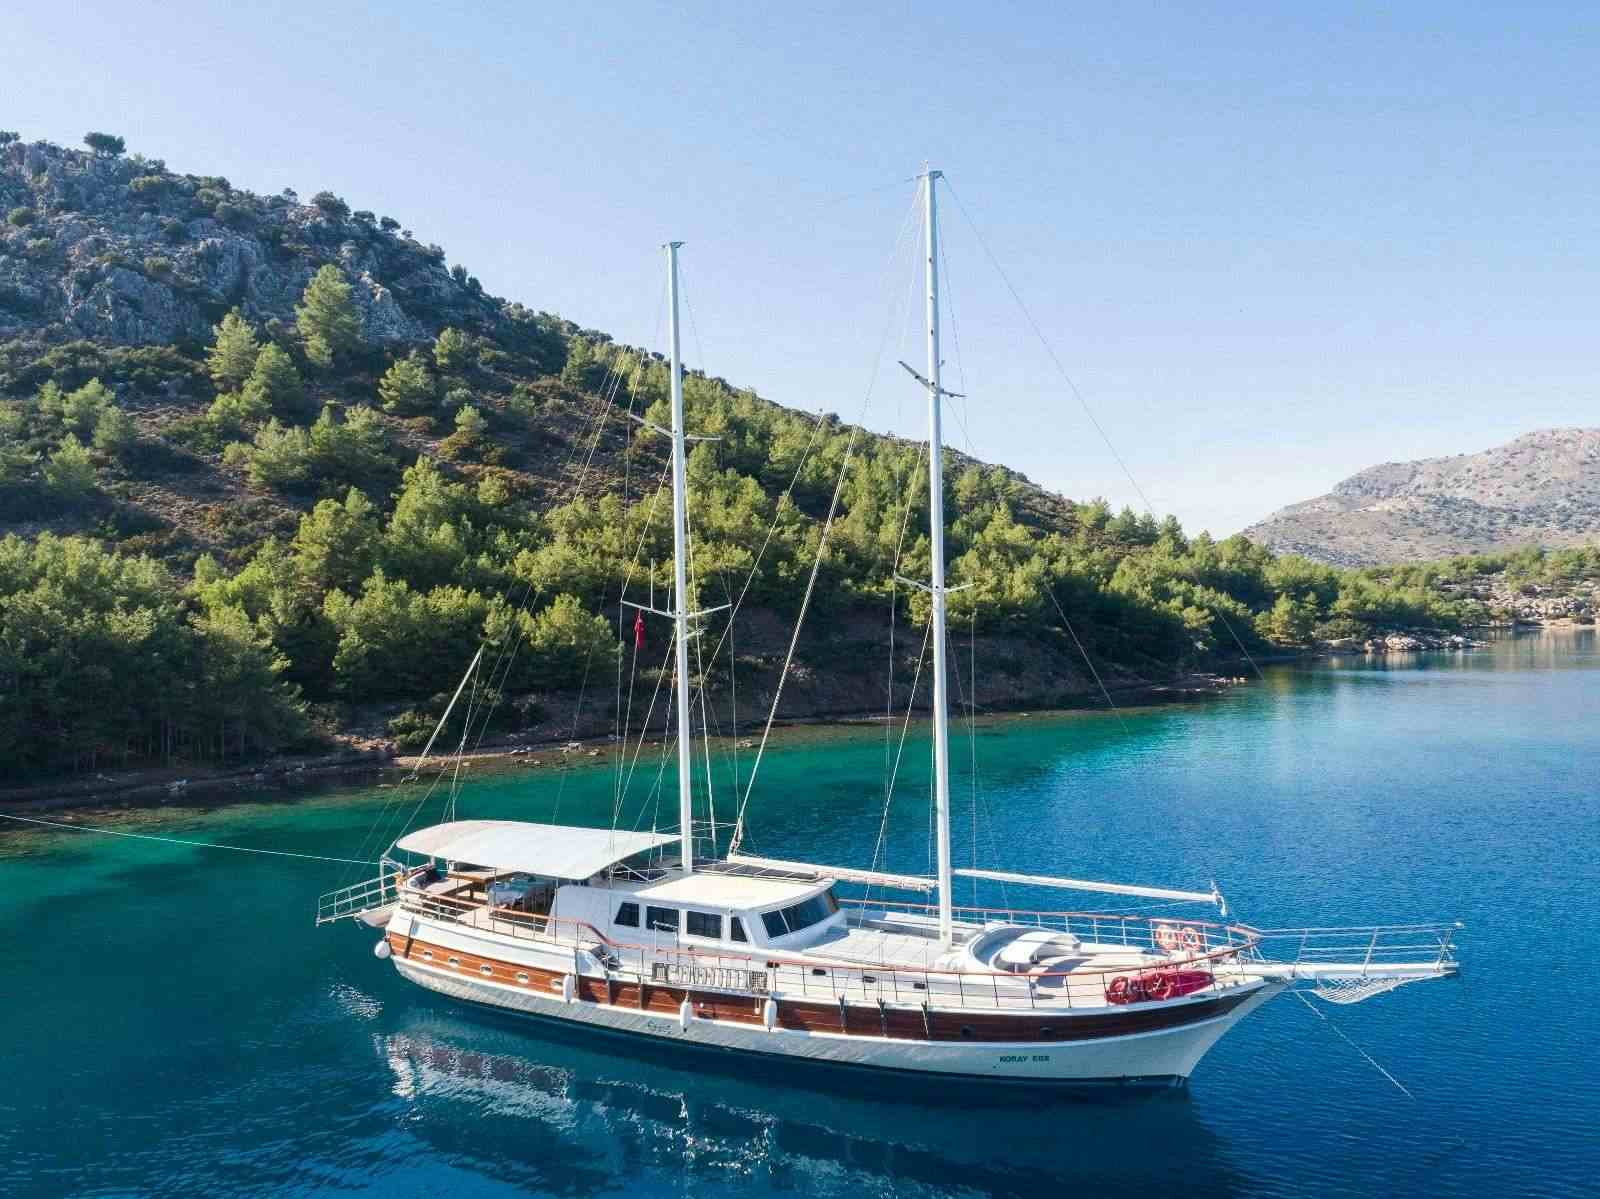 koray ege - Yacht Charter Kalamata & Boat hire in Greece & Turkey 1